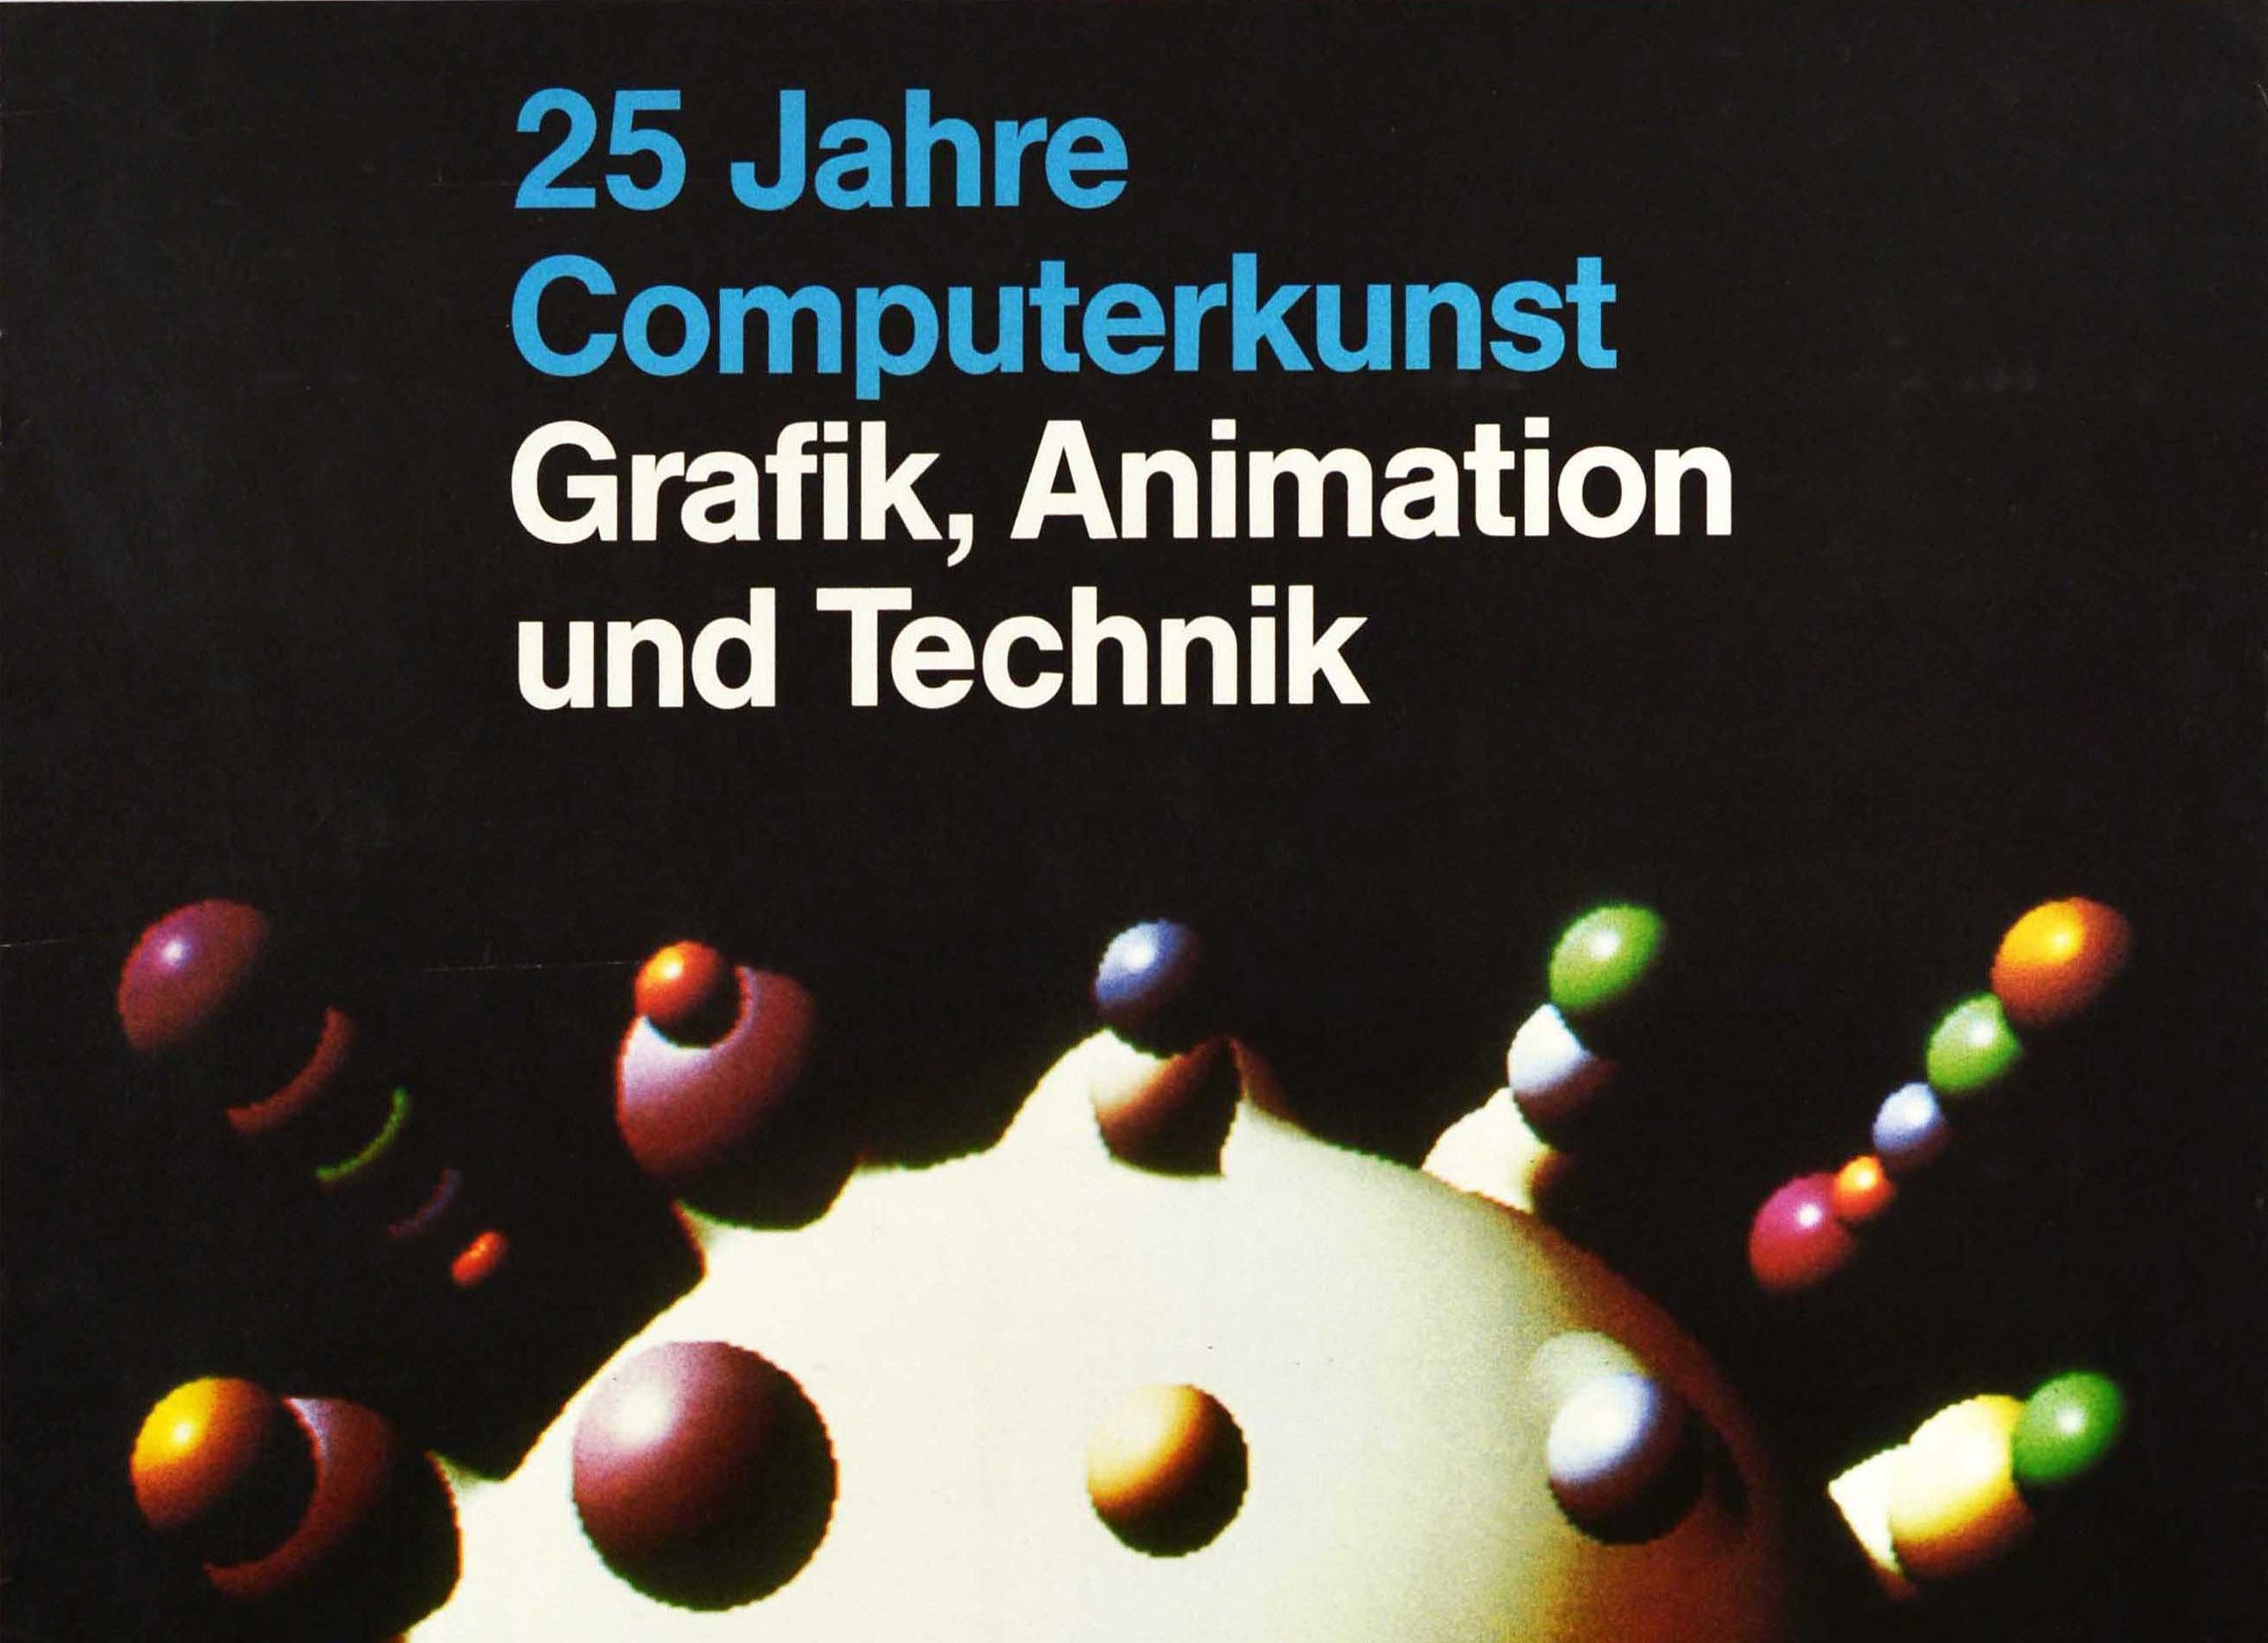 computer exhibition poster